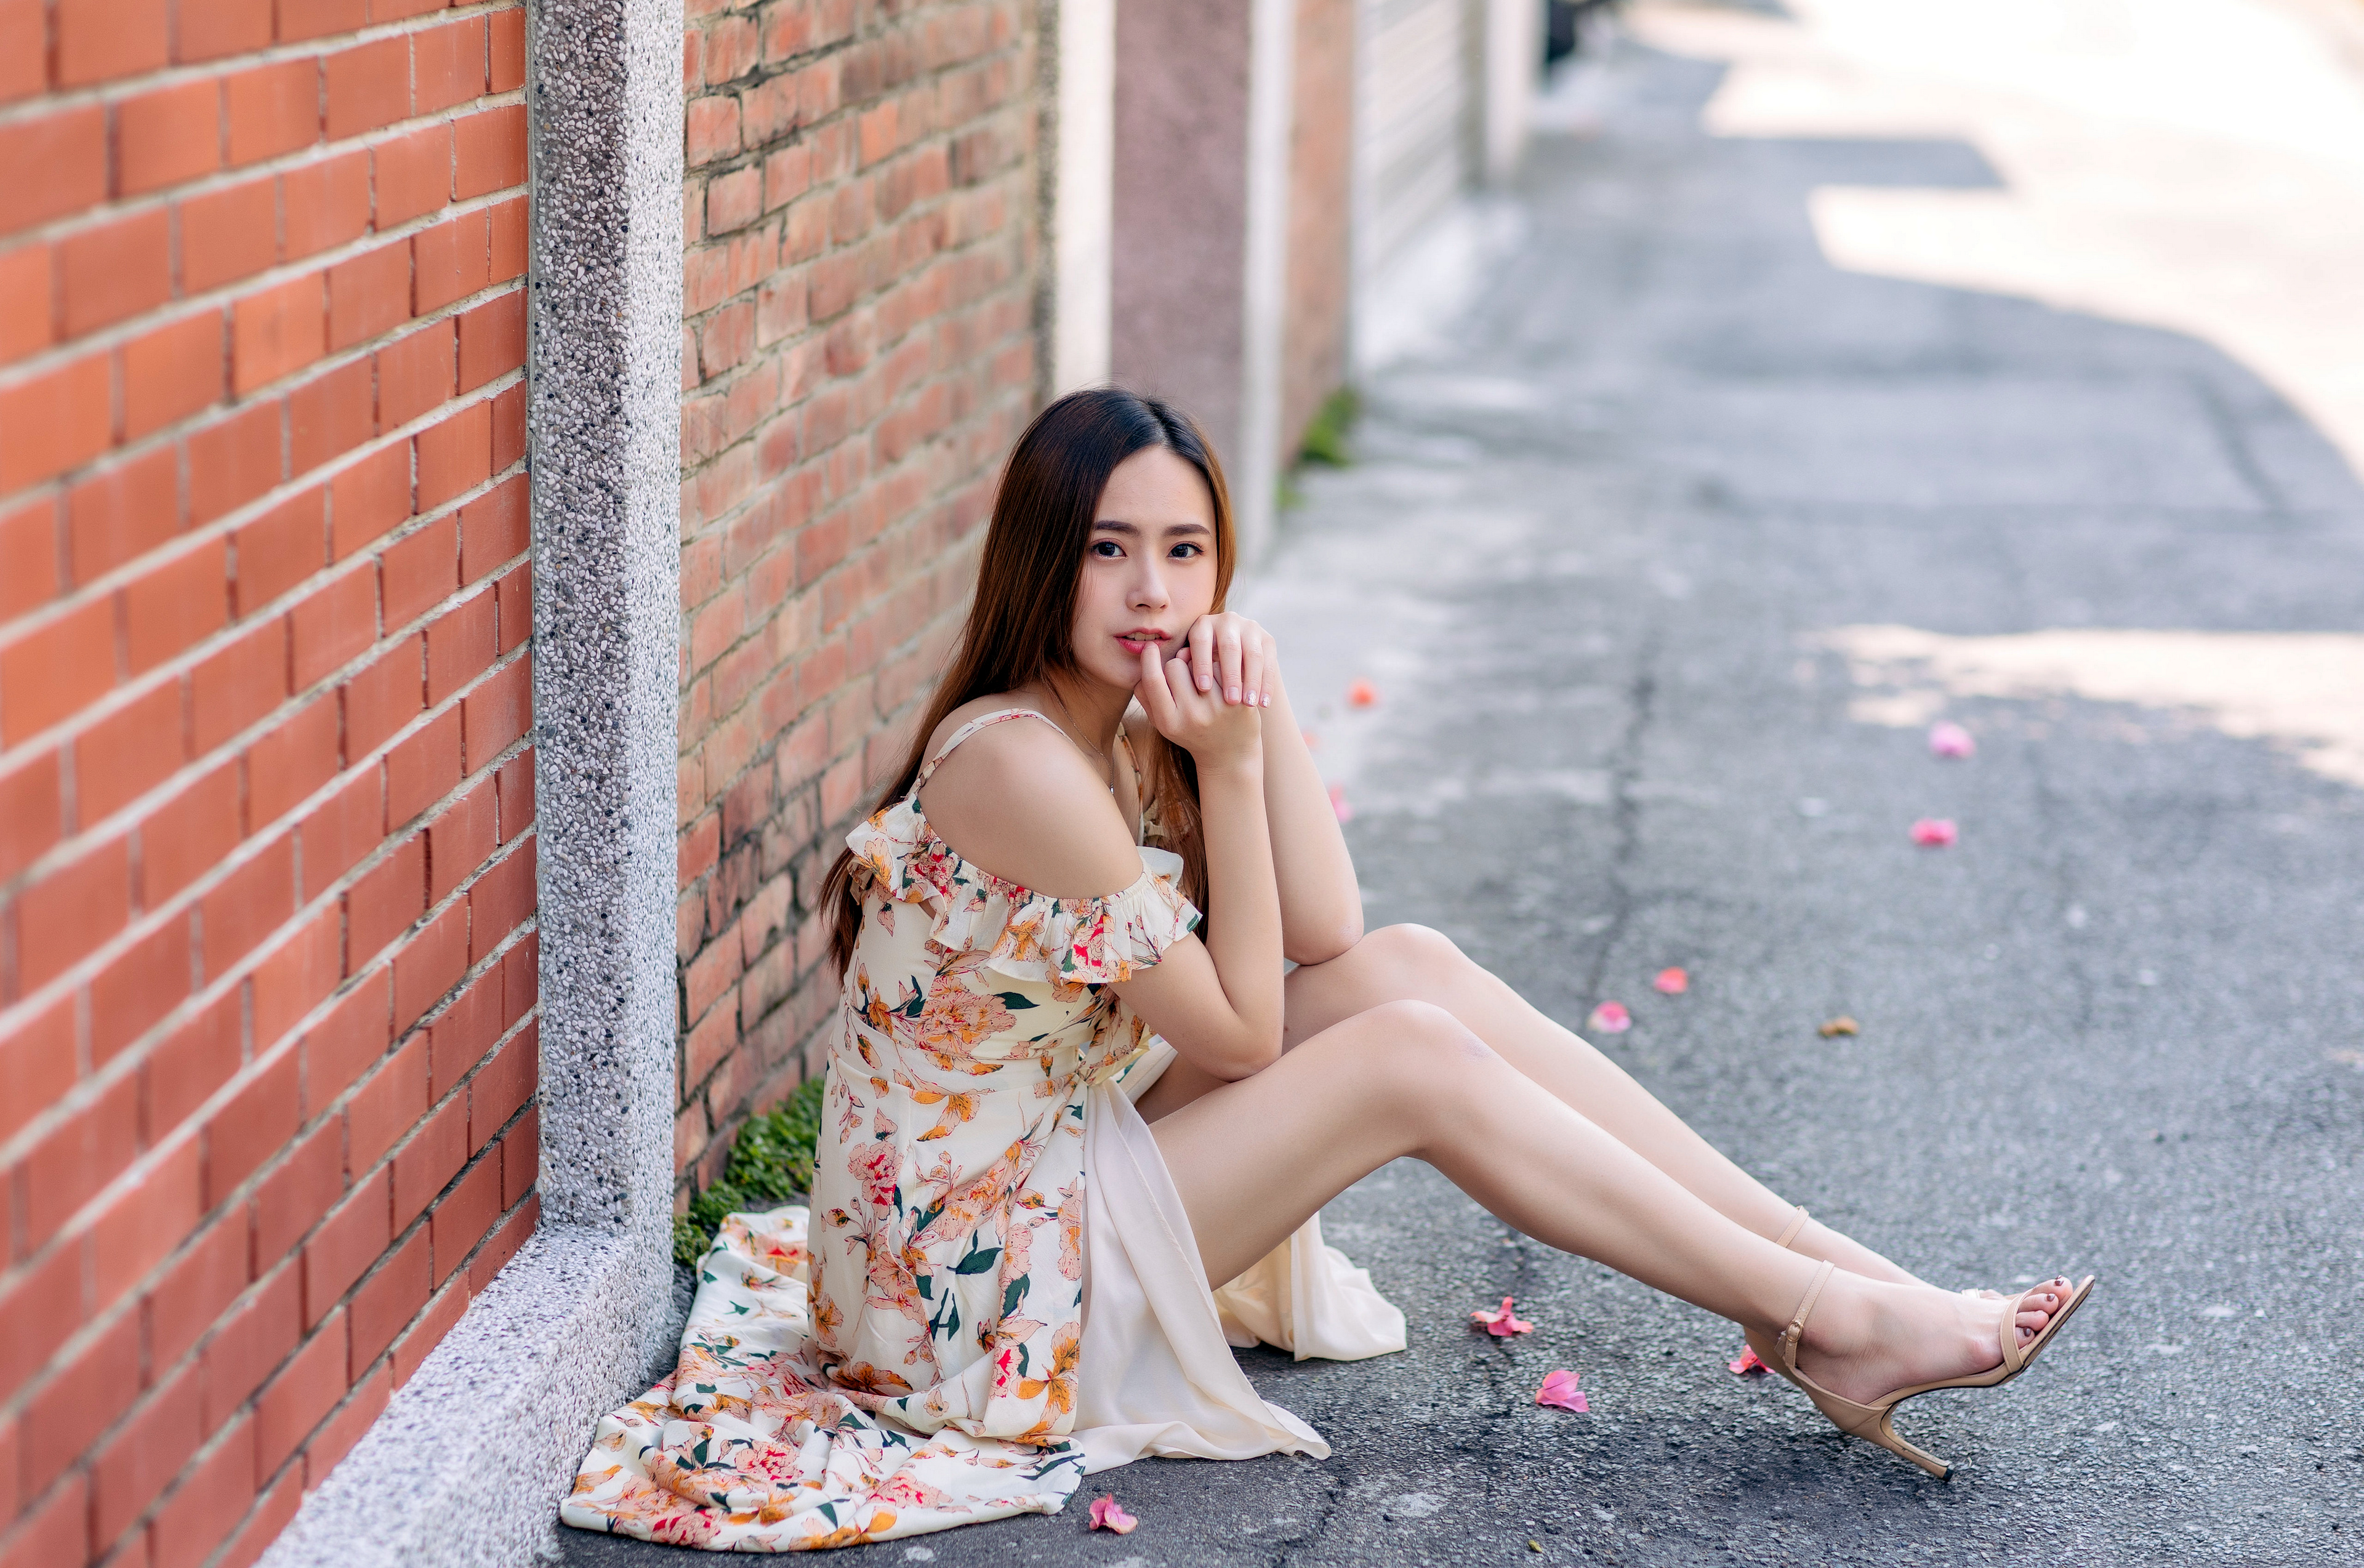 Asian Model Women Long Hair Brunette Sitting Barefoot Sandal Flower Dress Wall Bricks Depth Of Field 3840x2547